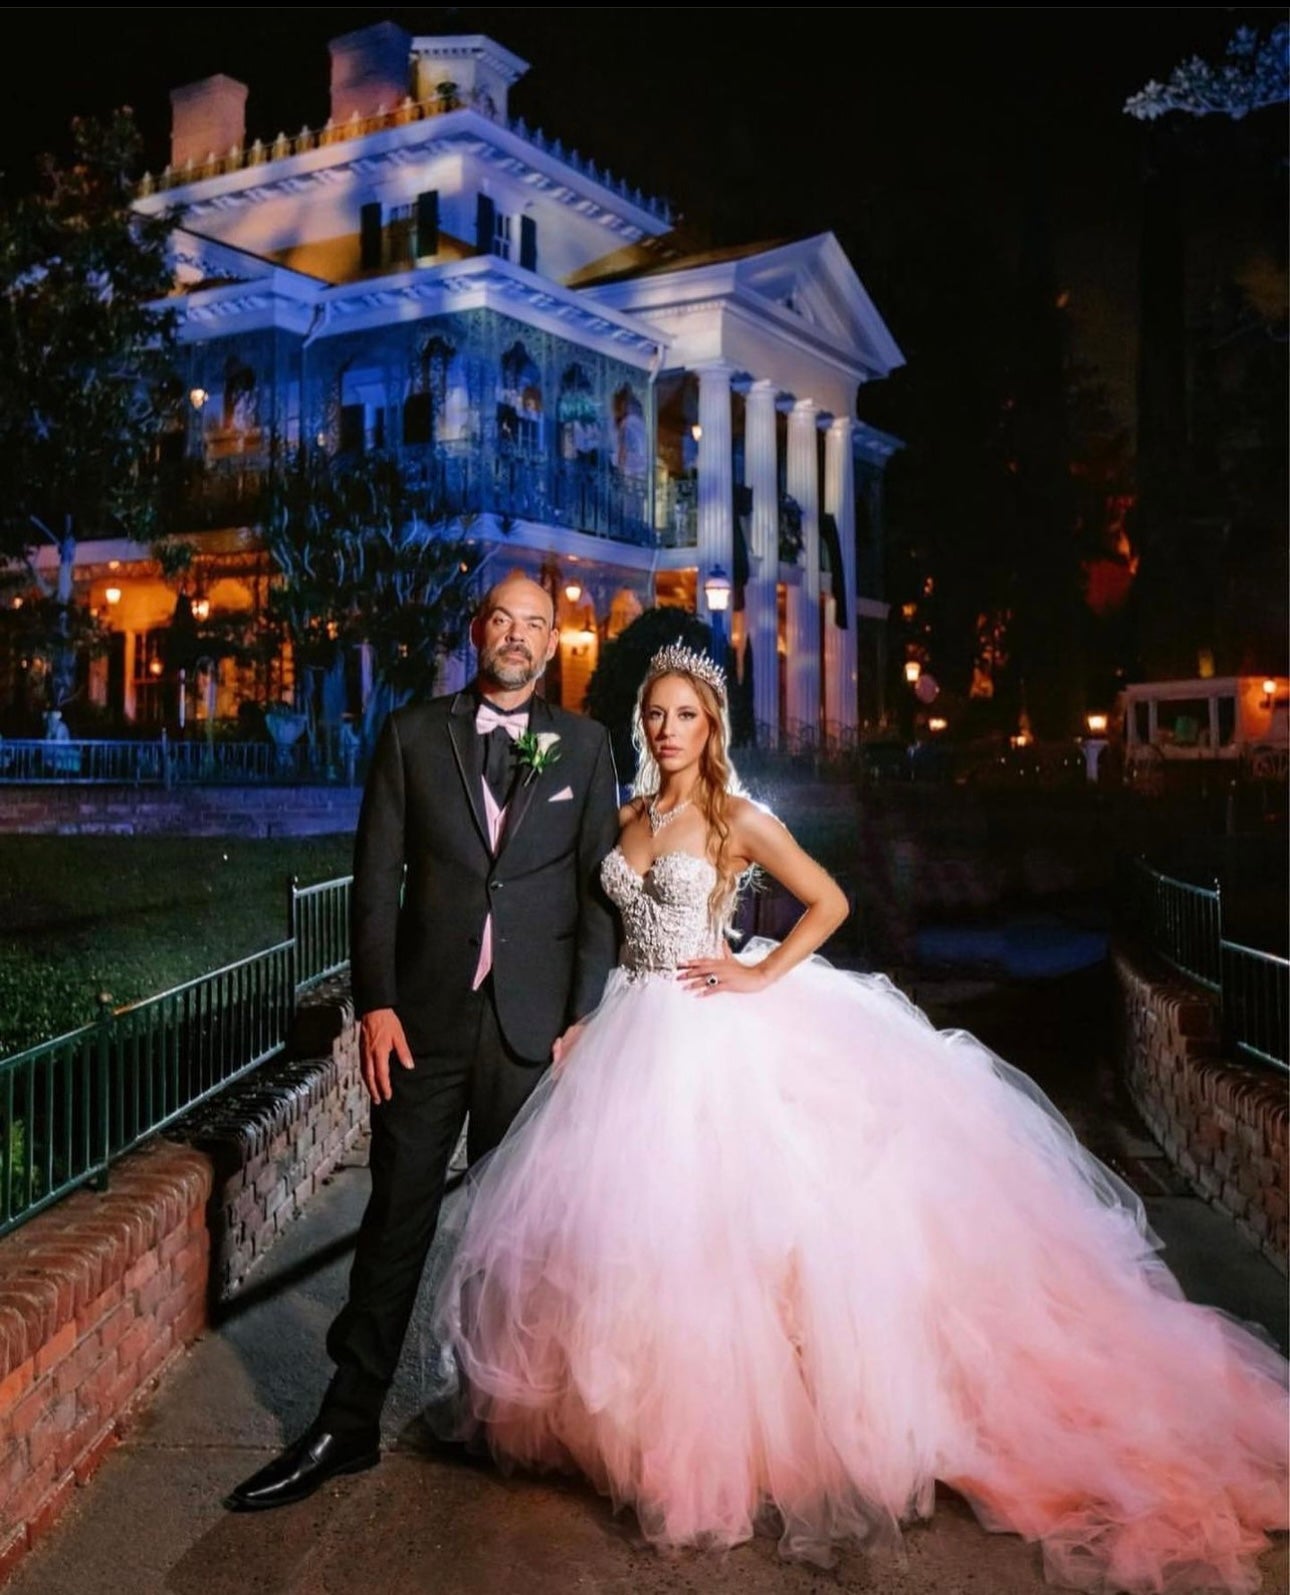 Bride Victoria wears a custom pink wedding dress by Lauren Elaine for her wedding at Disneyland's Haunted Mansion.